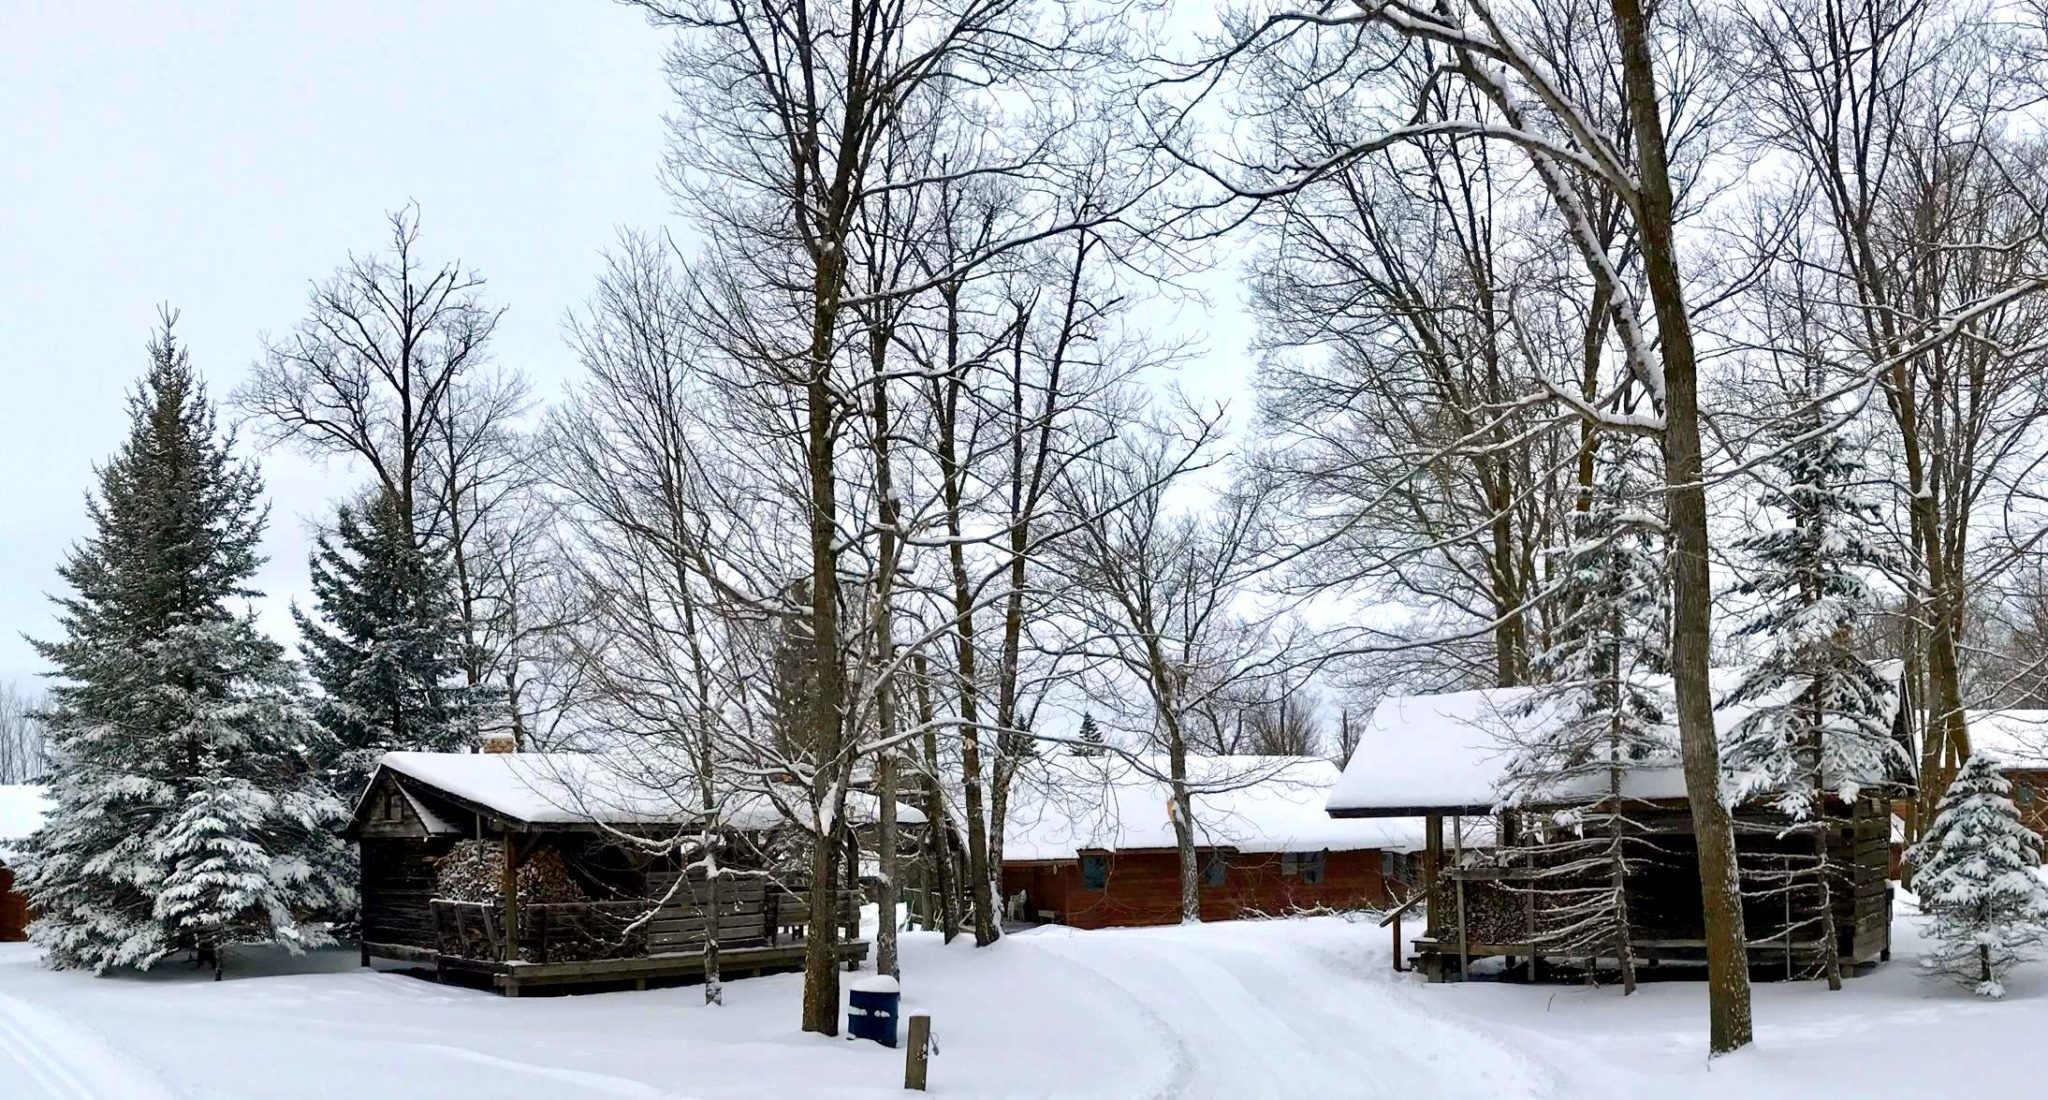 Snowy scene around the Finish Log and Sava Sauna cabins, January 2nd, 2016.